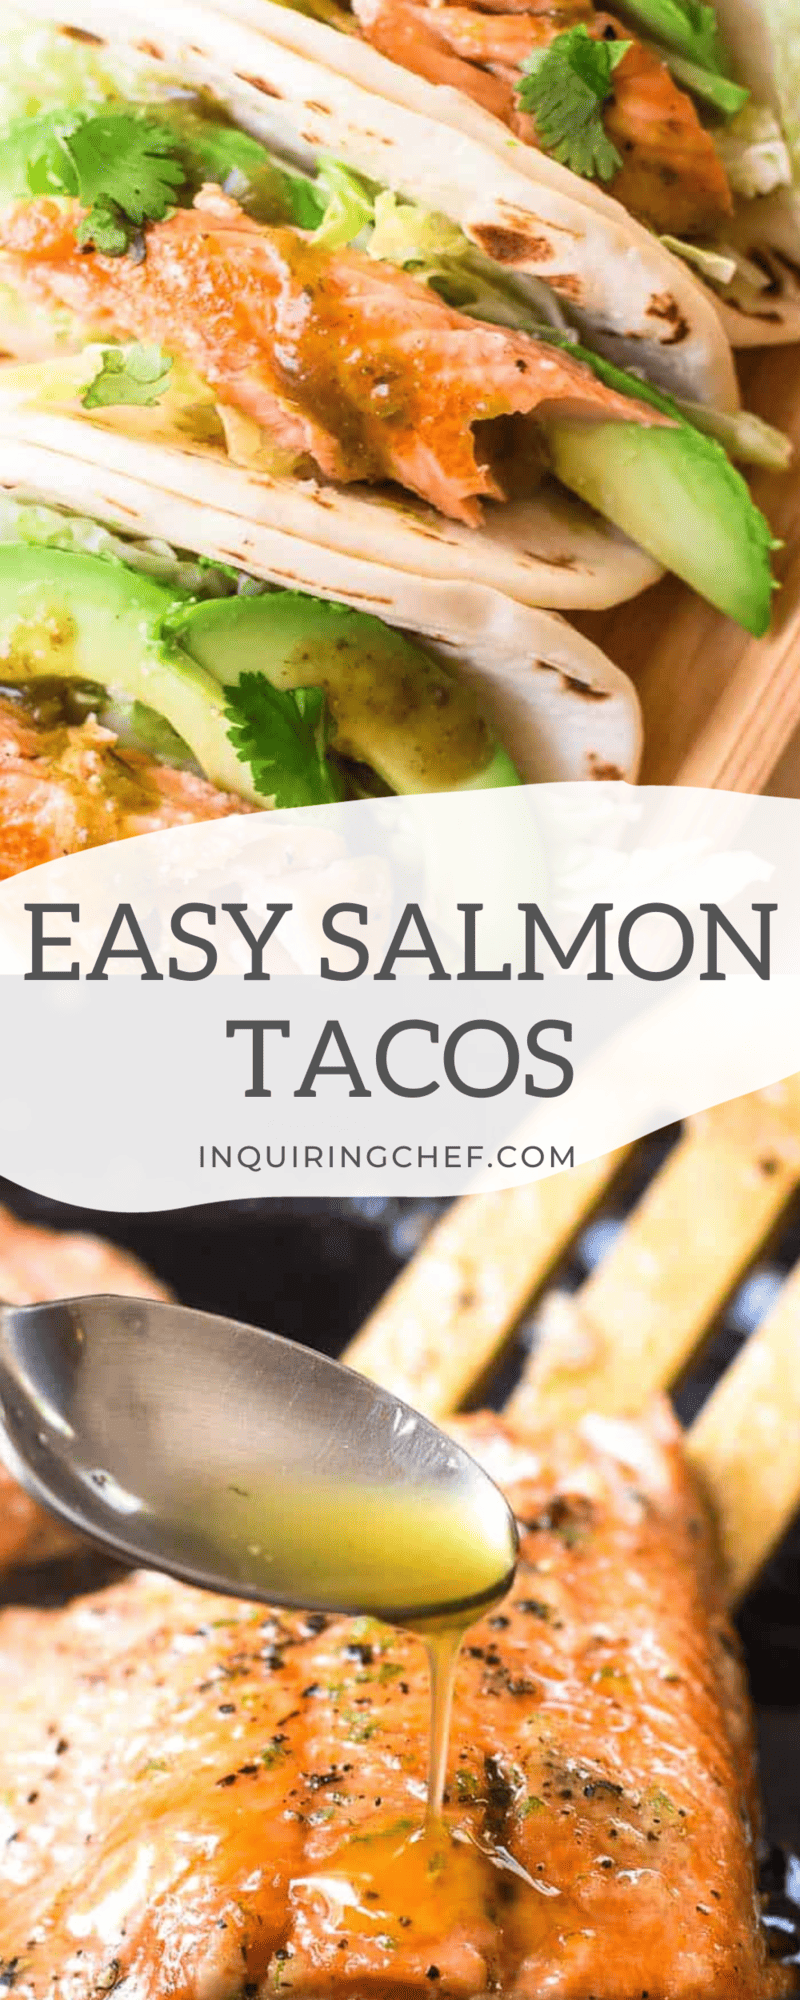 salmon tacos